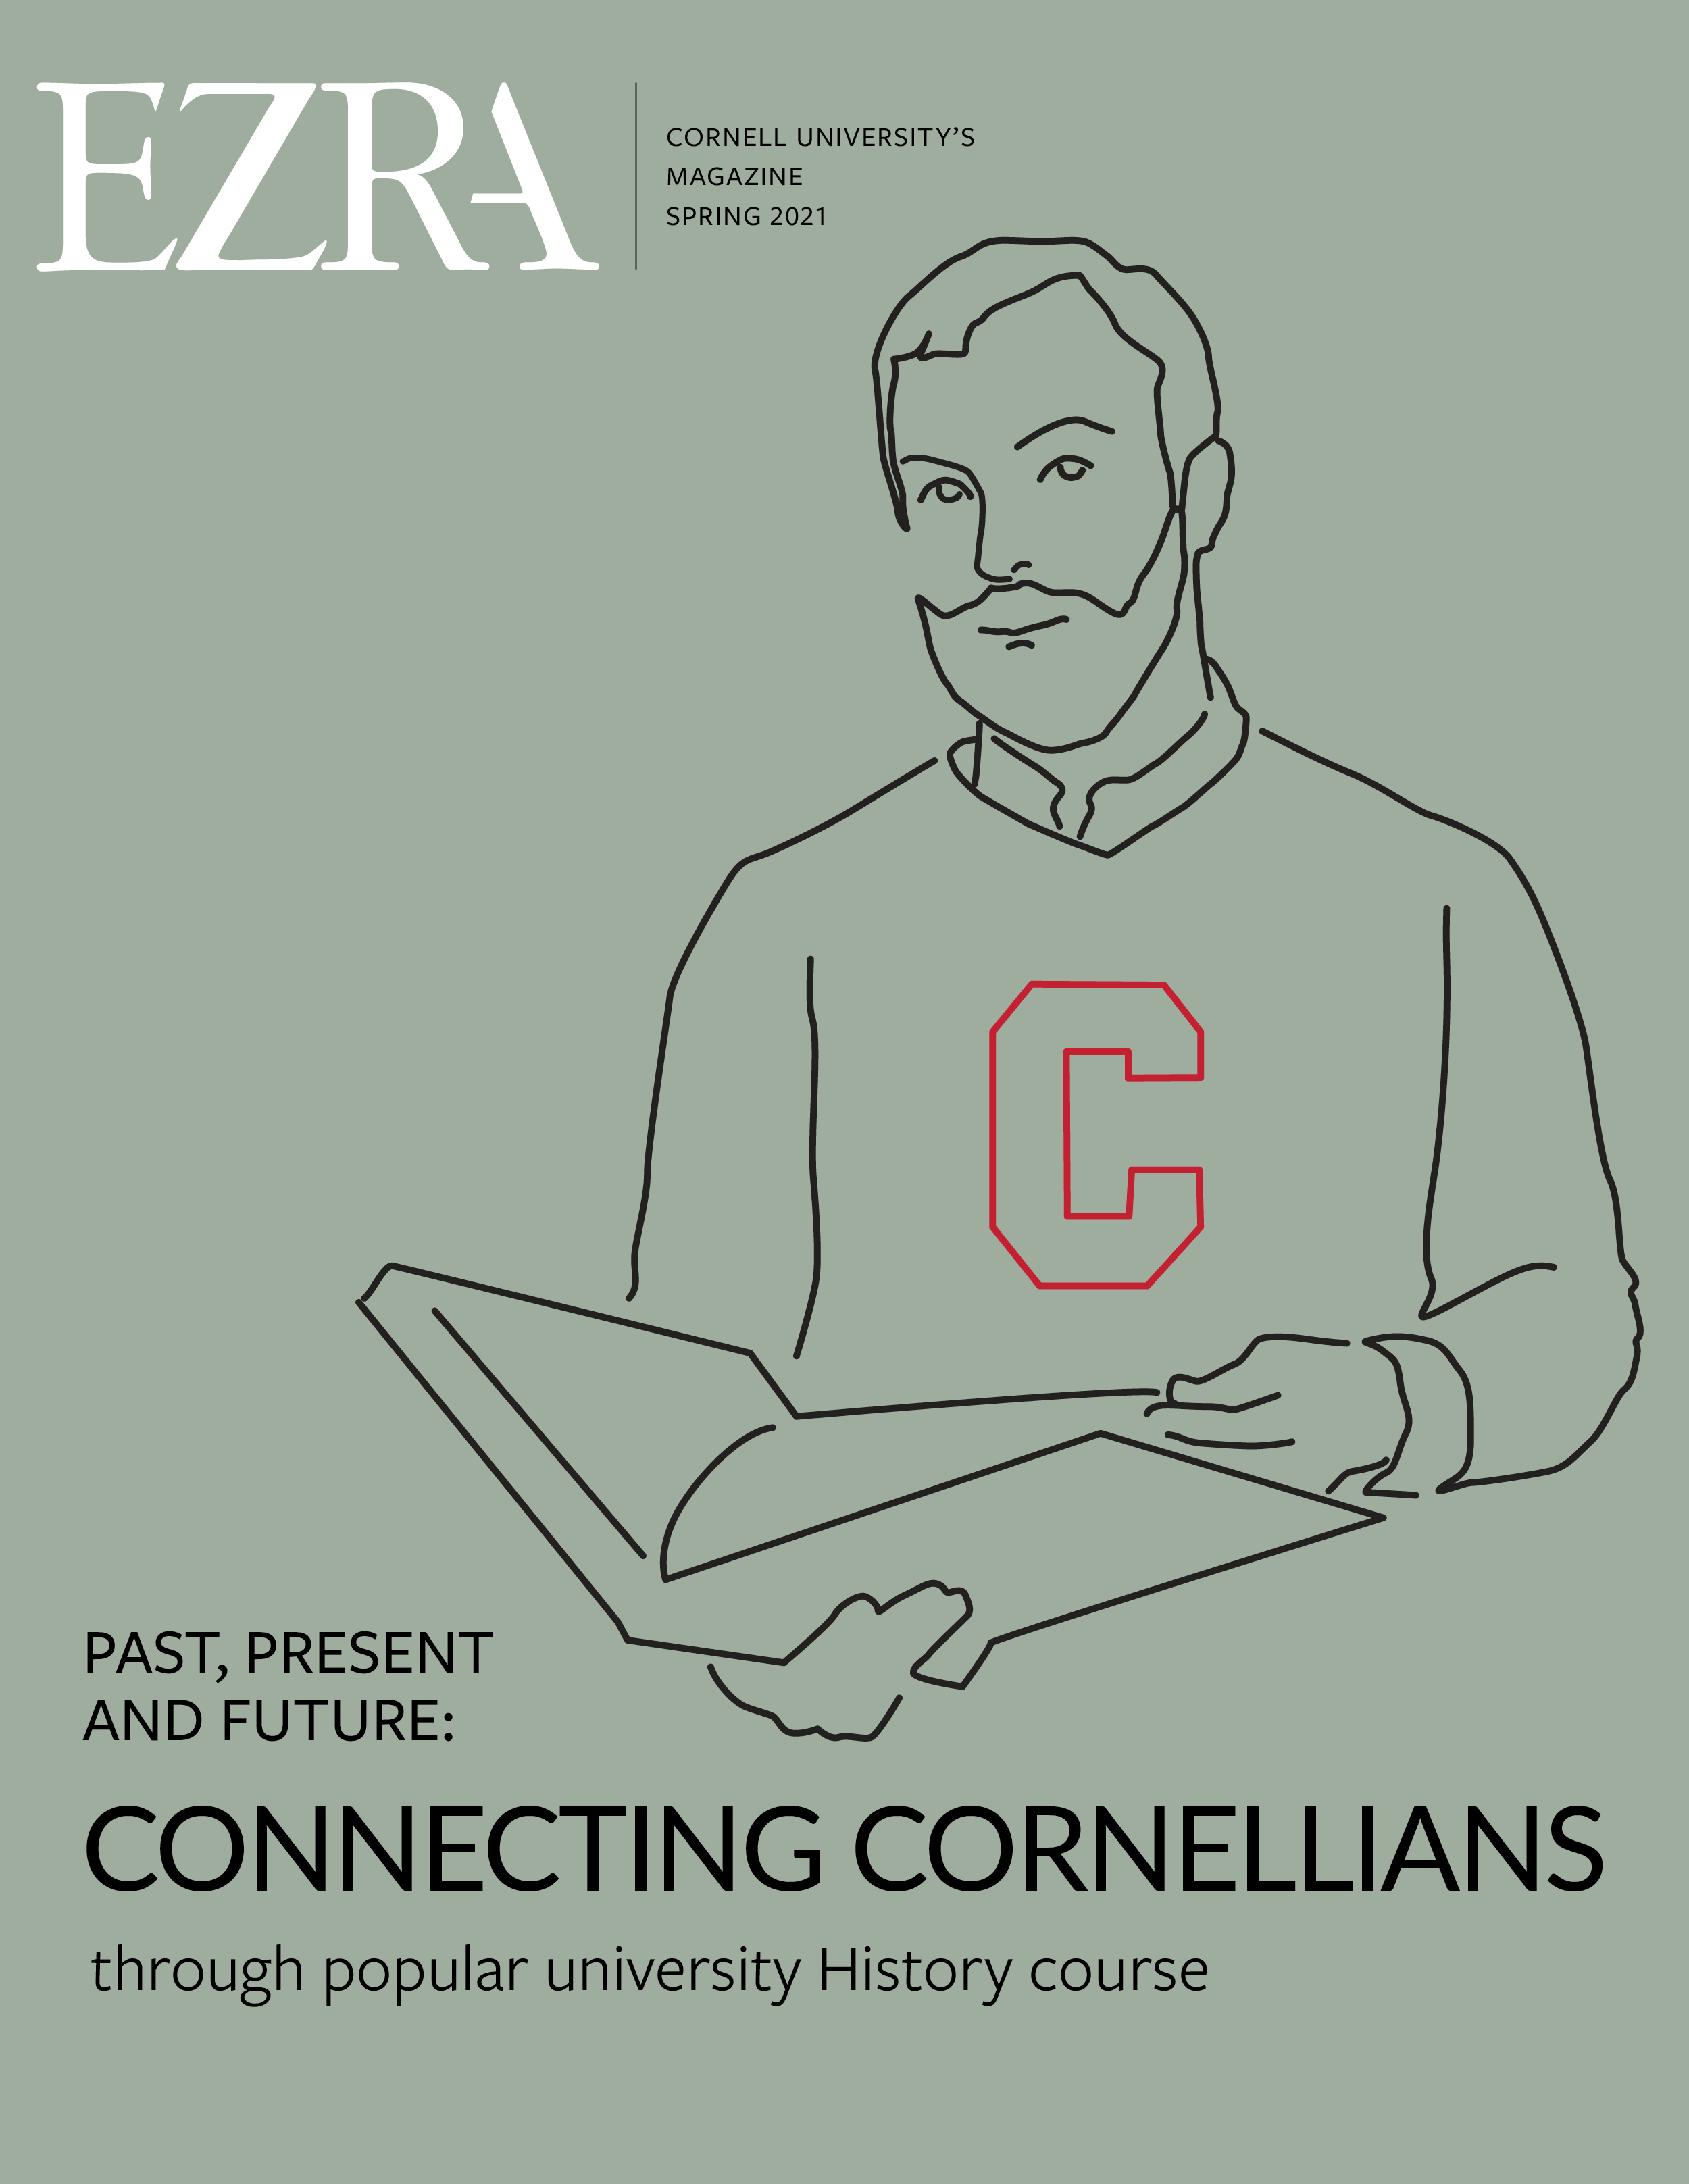 Connecting Cornellians through popular university history course